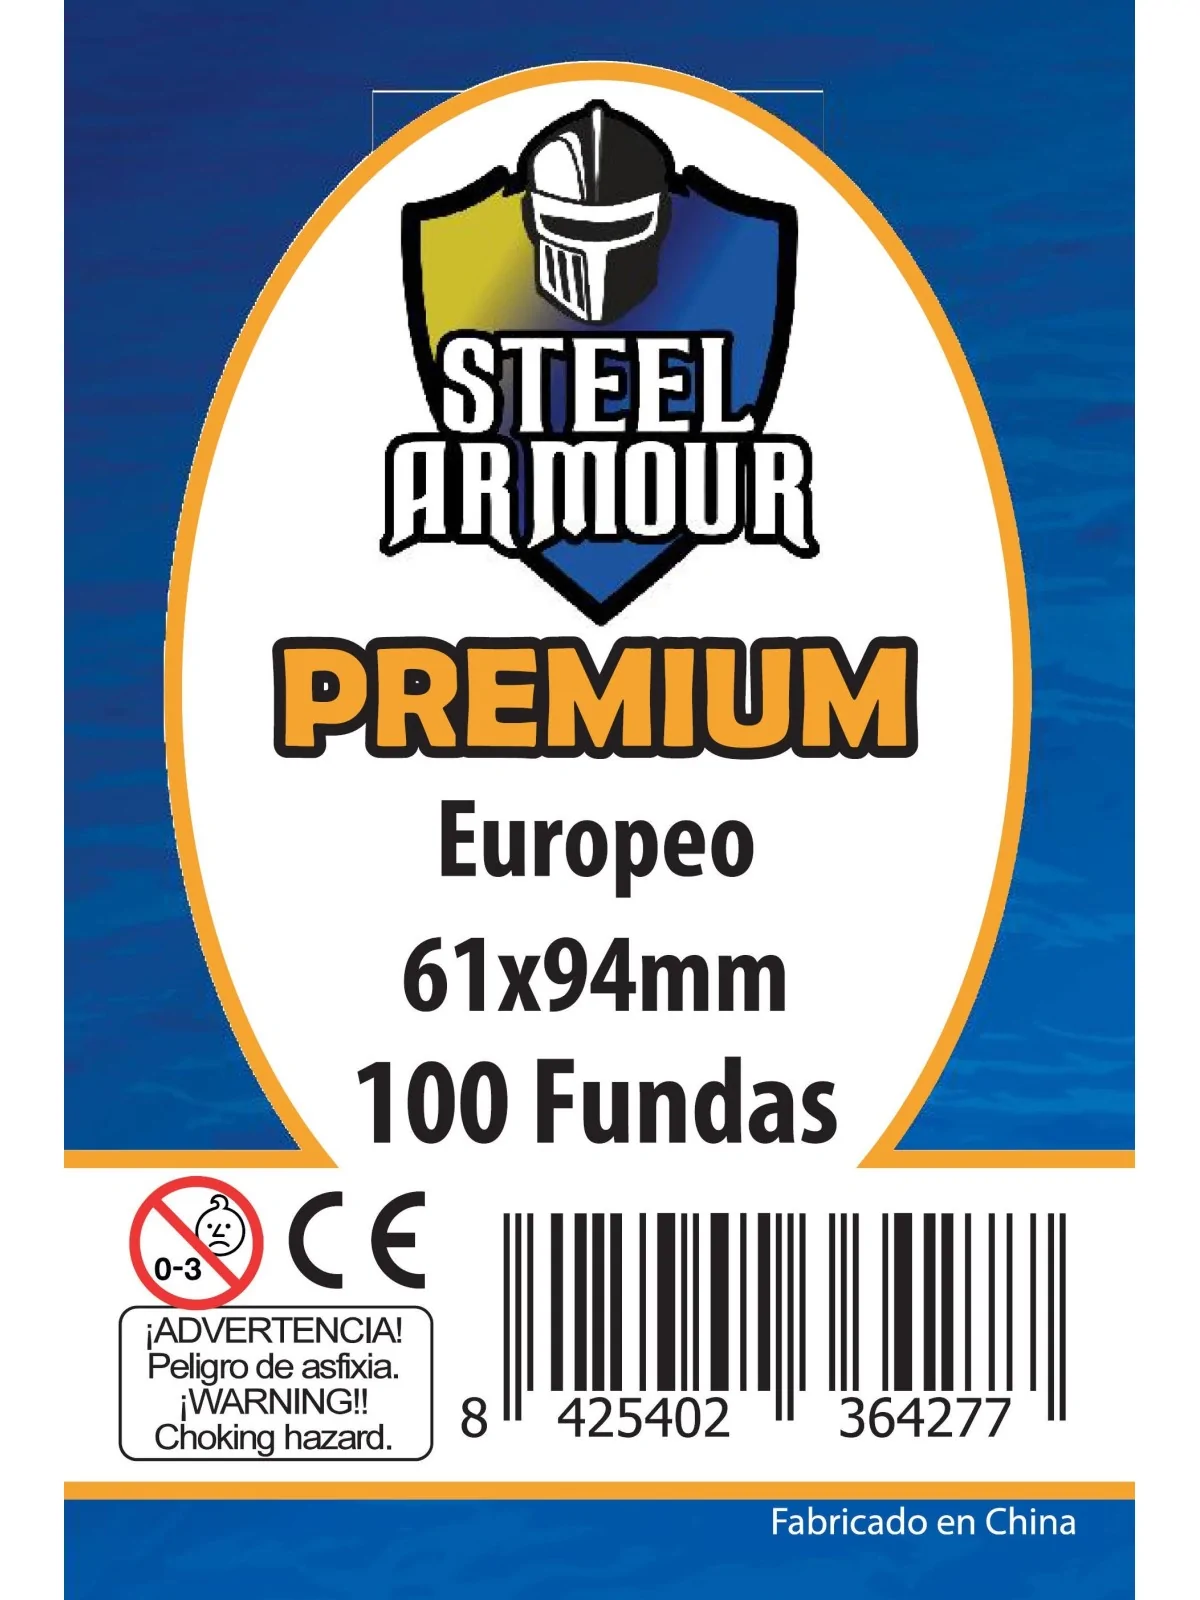 Comprar Steel Armour Europeo Premium (Pack of 100) (61x94mm) barato al